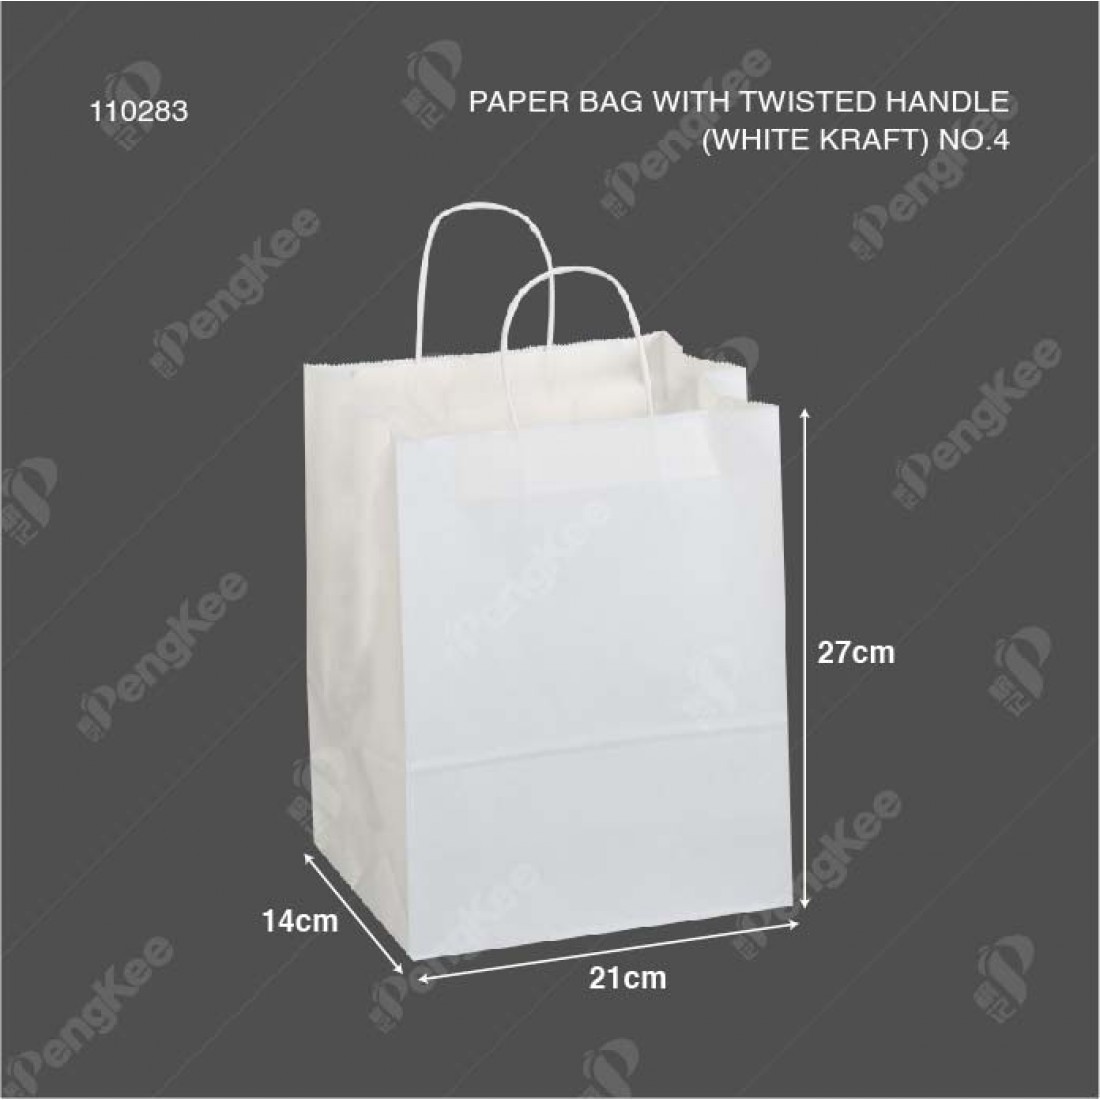 WHITE TWISTED HANDLE PAPER BAG NO.4- 21 X 27 X 14 (CM)